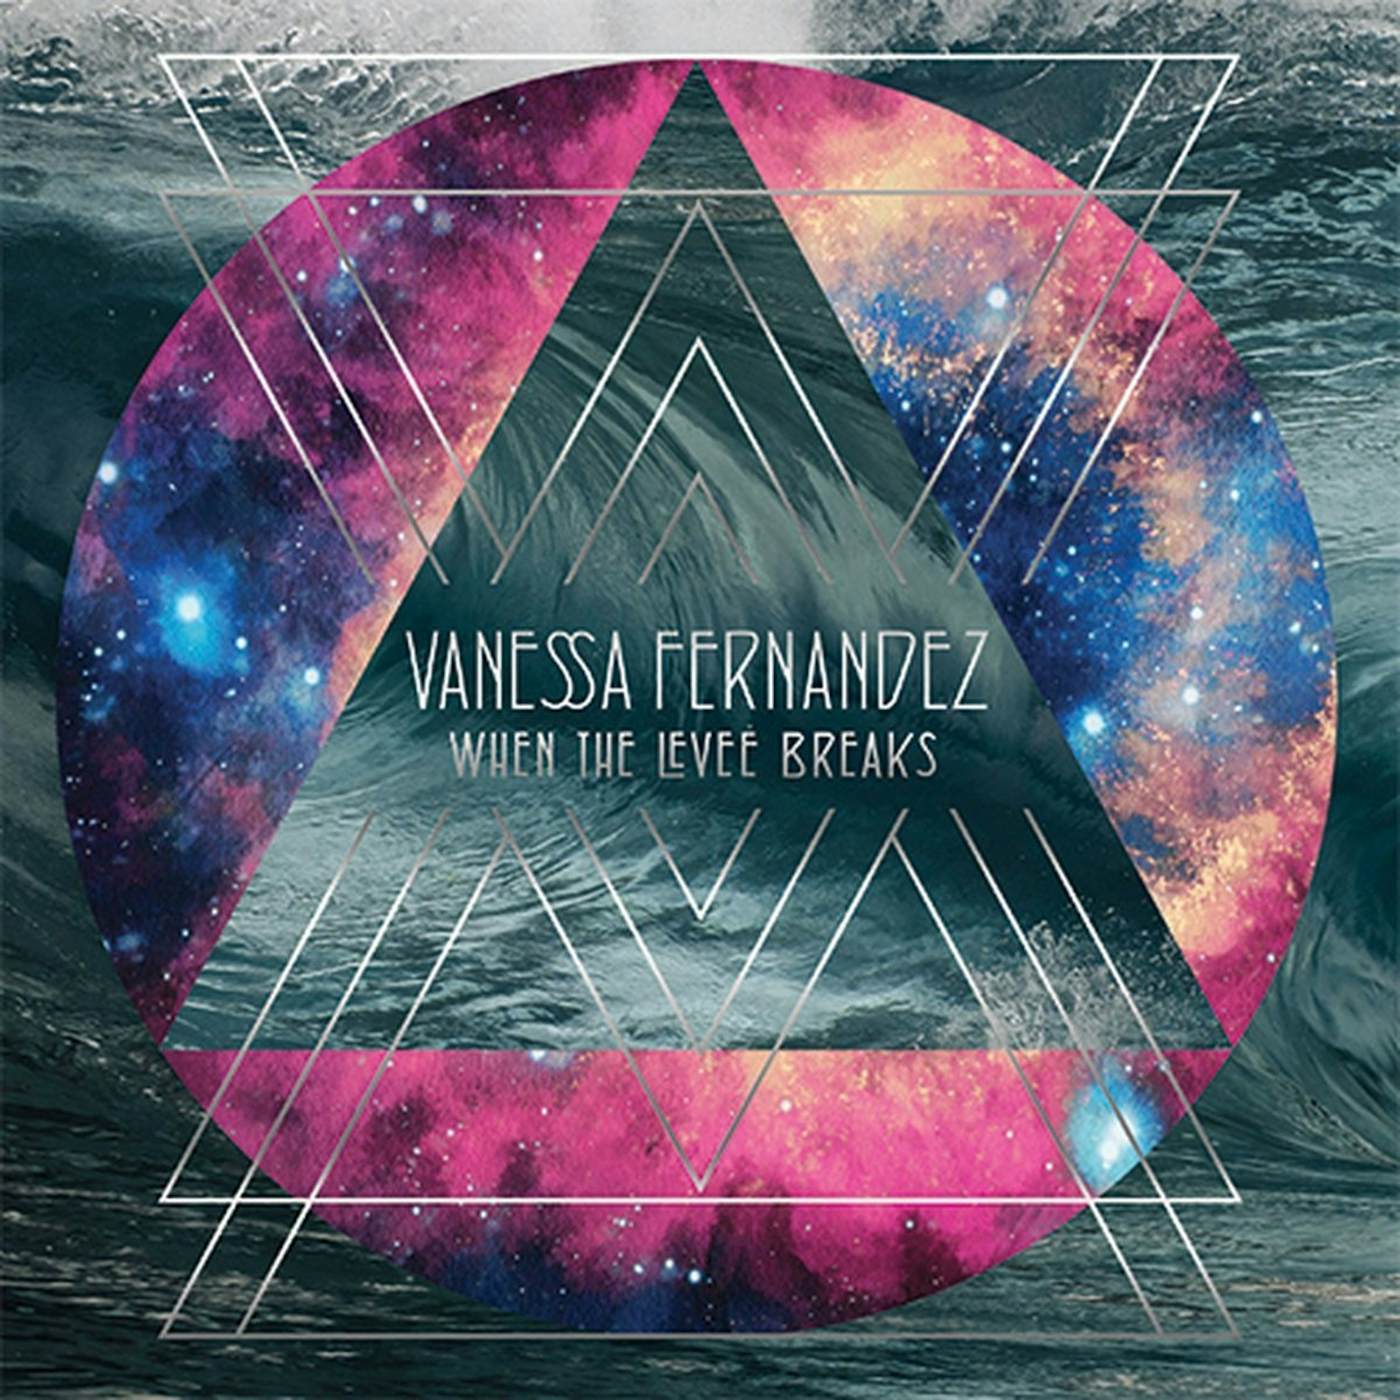 Navessa Fernandez When The Levee Breaks Vinyl Record